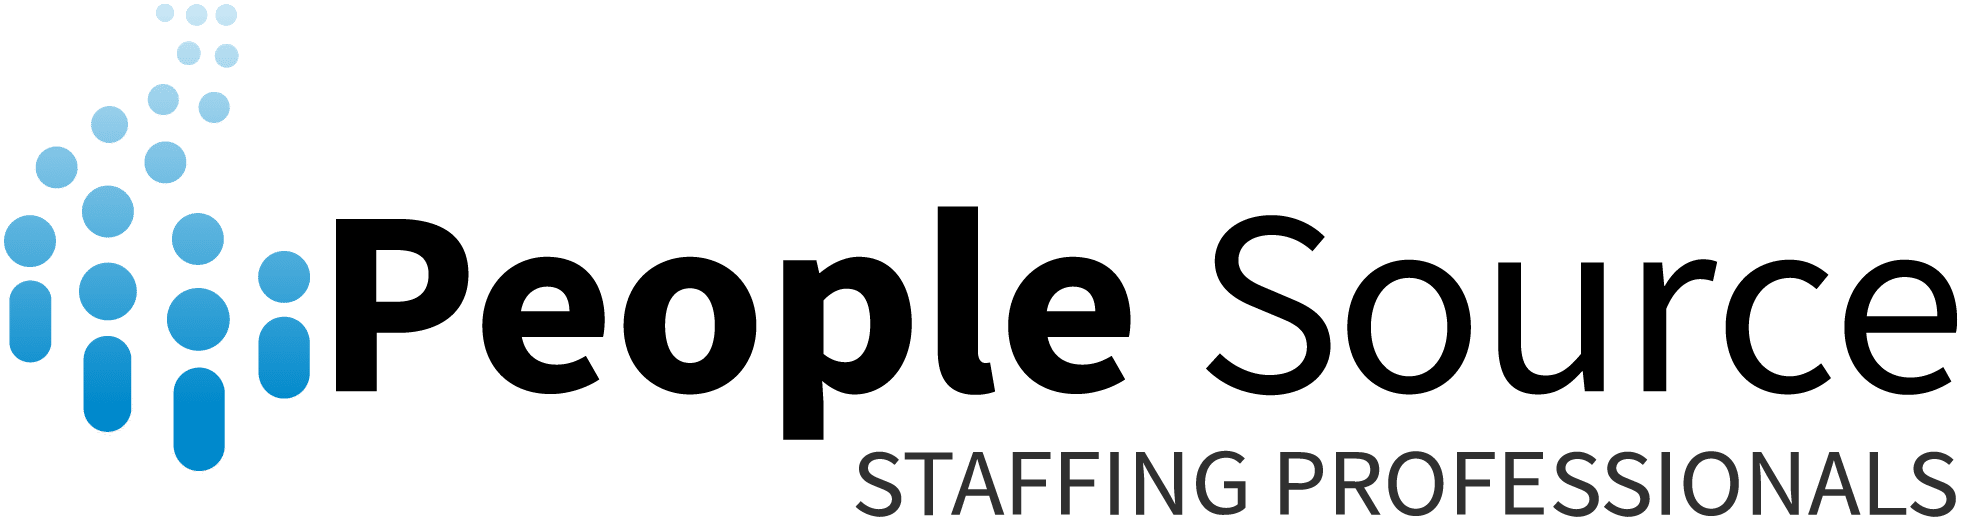 PeopleSource logo